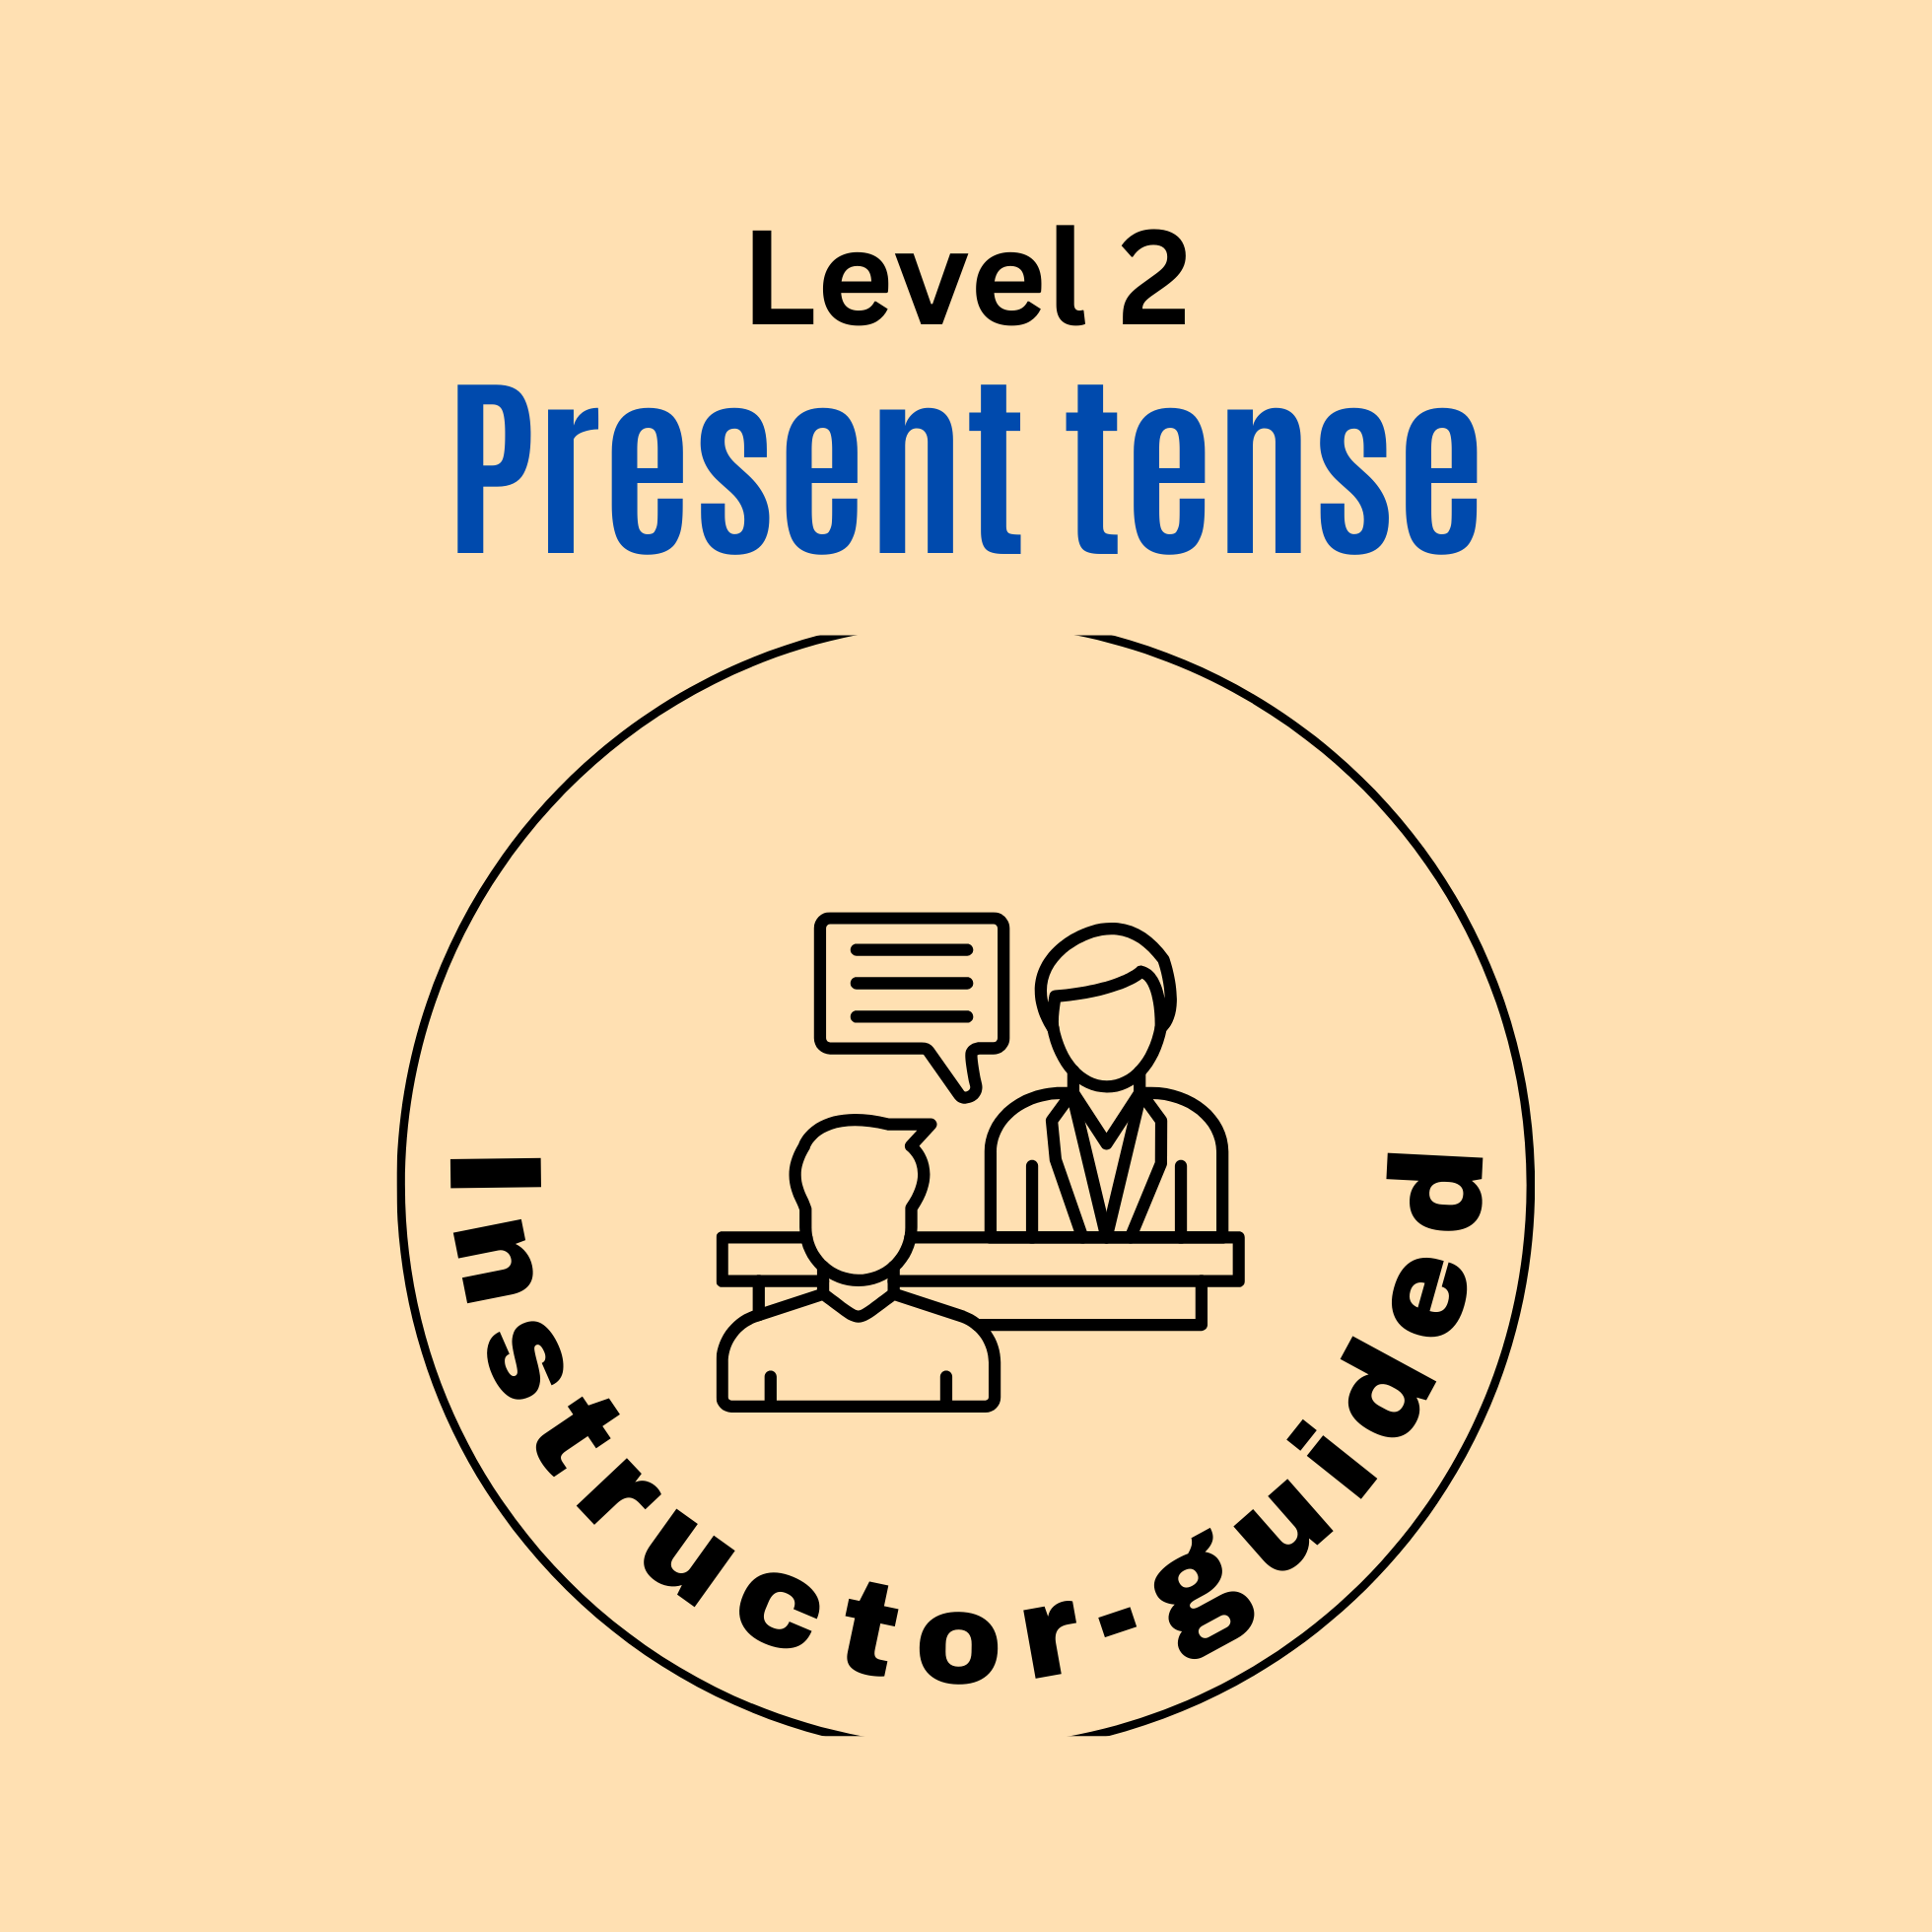 Level 2 Present tense